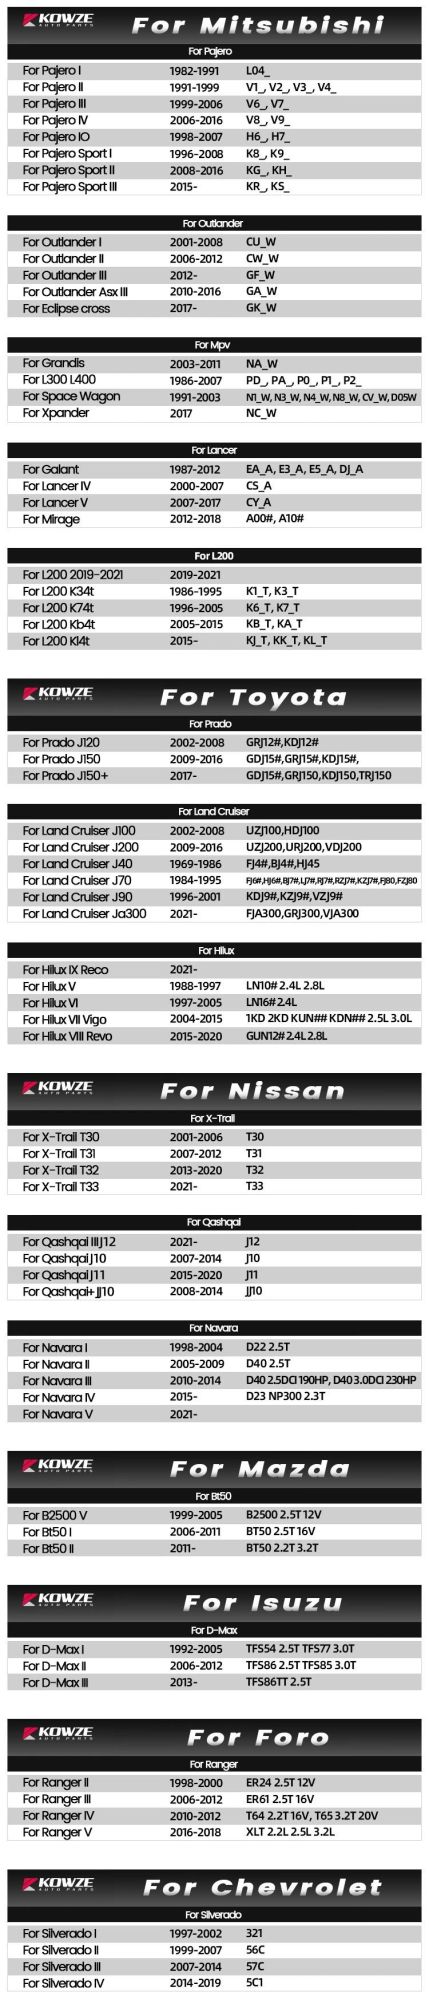 Kowze Auto Parts Drive System Parts Differential for Mitsubishi L200 Pajero Outlander MPV Lancer Nissan Navara Mazda Bt50 Toyota Hilux Prado Land Cruiser Ford